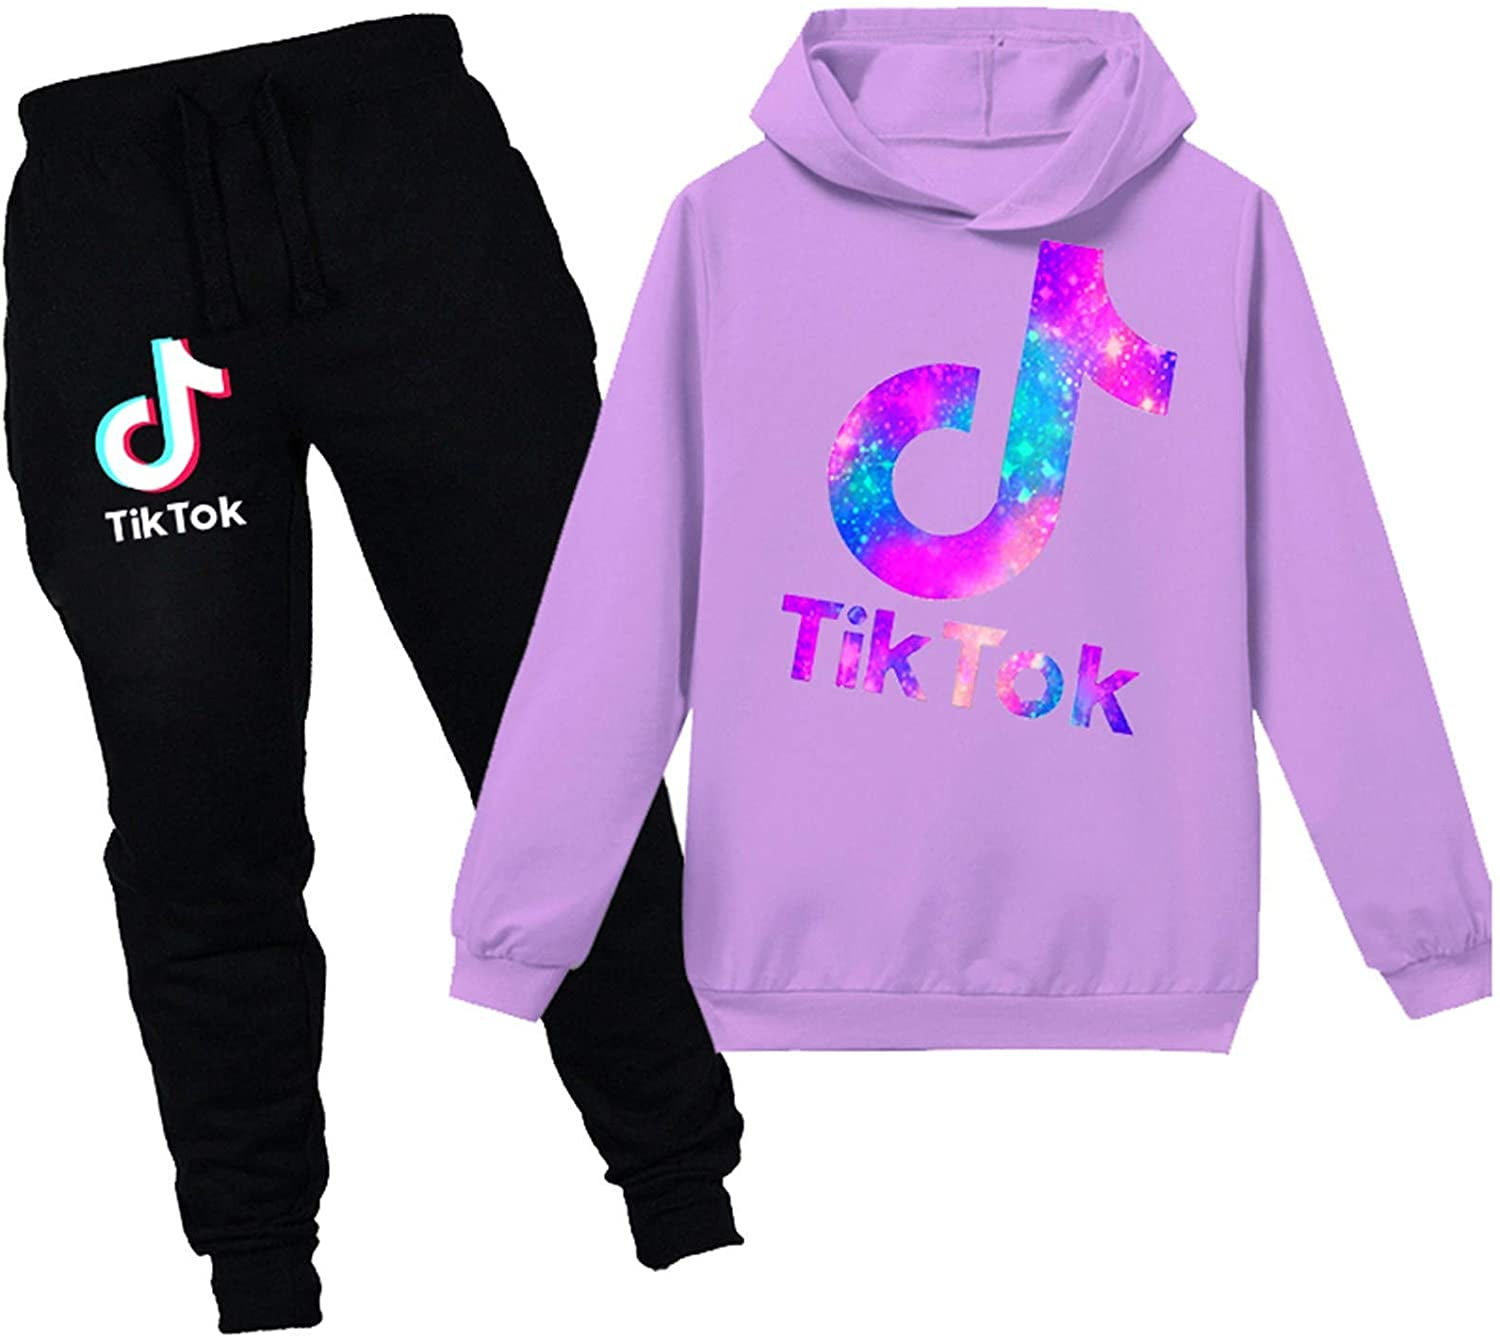 TIK-Tok Hoodies and Sweatpants Causal 2 Piece Outfits Kids Tracksuit Set Children Sweatshirt for Girls Boys 